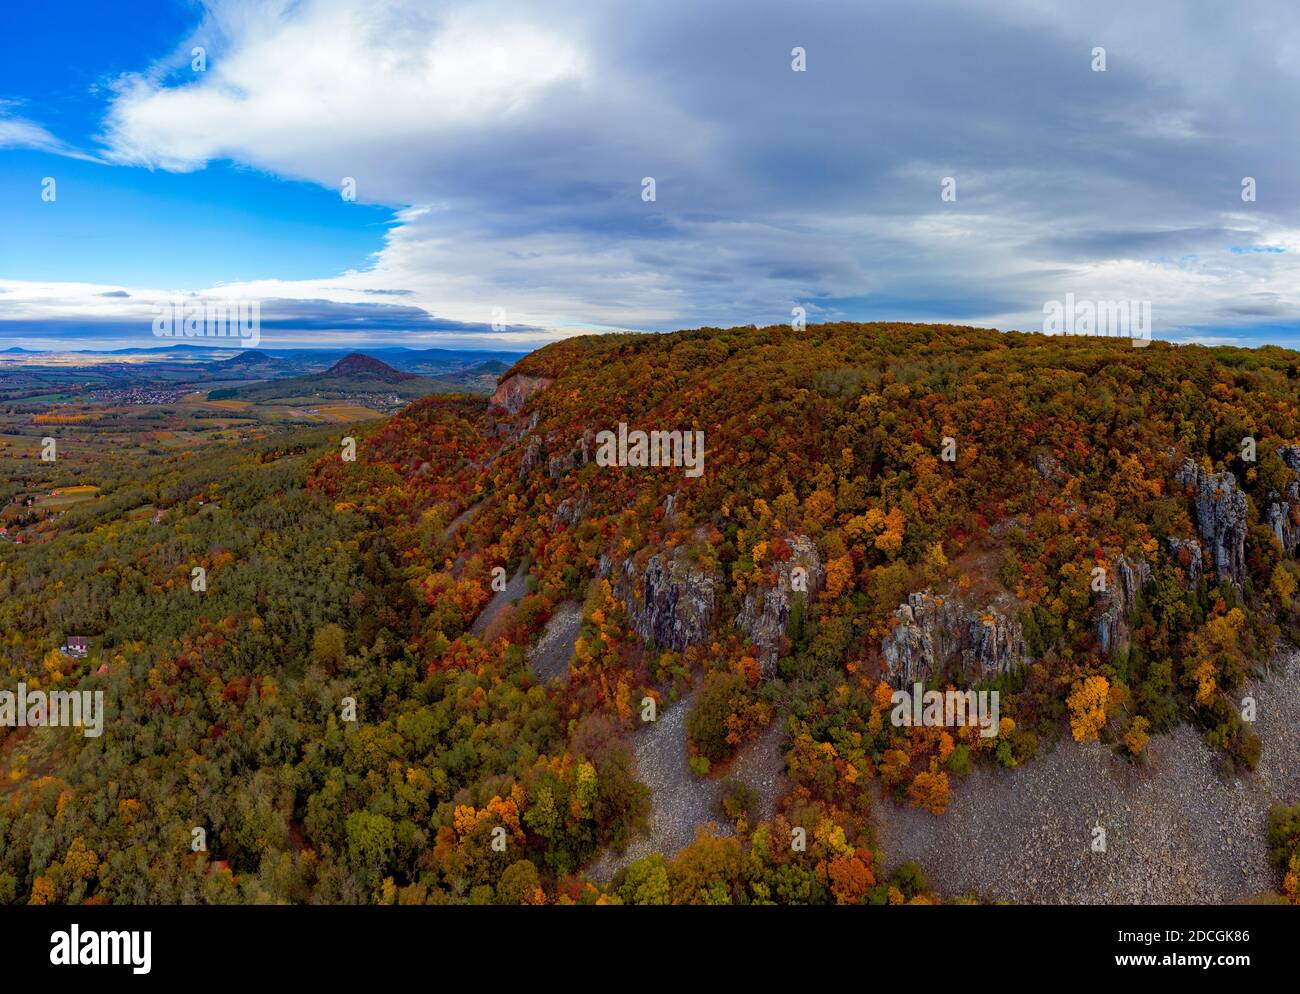 Saint Gerorge Hill in Hungary badacsony region. Amazing vulcanic mountain where giant basalt columns  located. Beautiful autumn colorful photo. Perfed Stock Photo